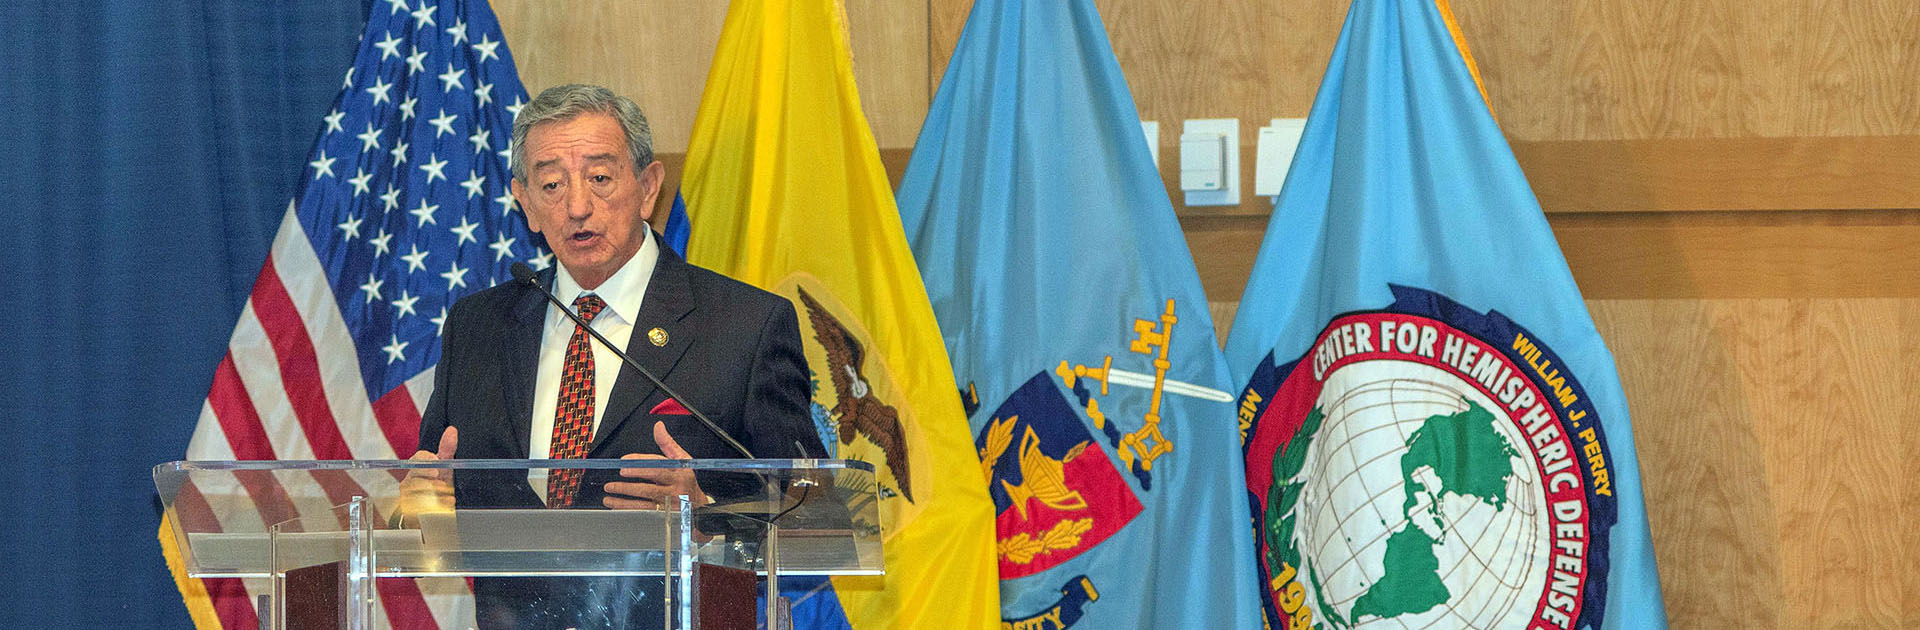 Ecuadorian Minister of Defense Oswaldo Jarrin speaking at WJPC Hemispheric Forum